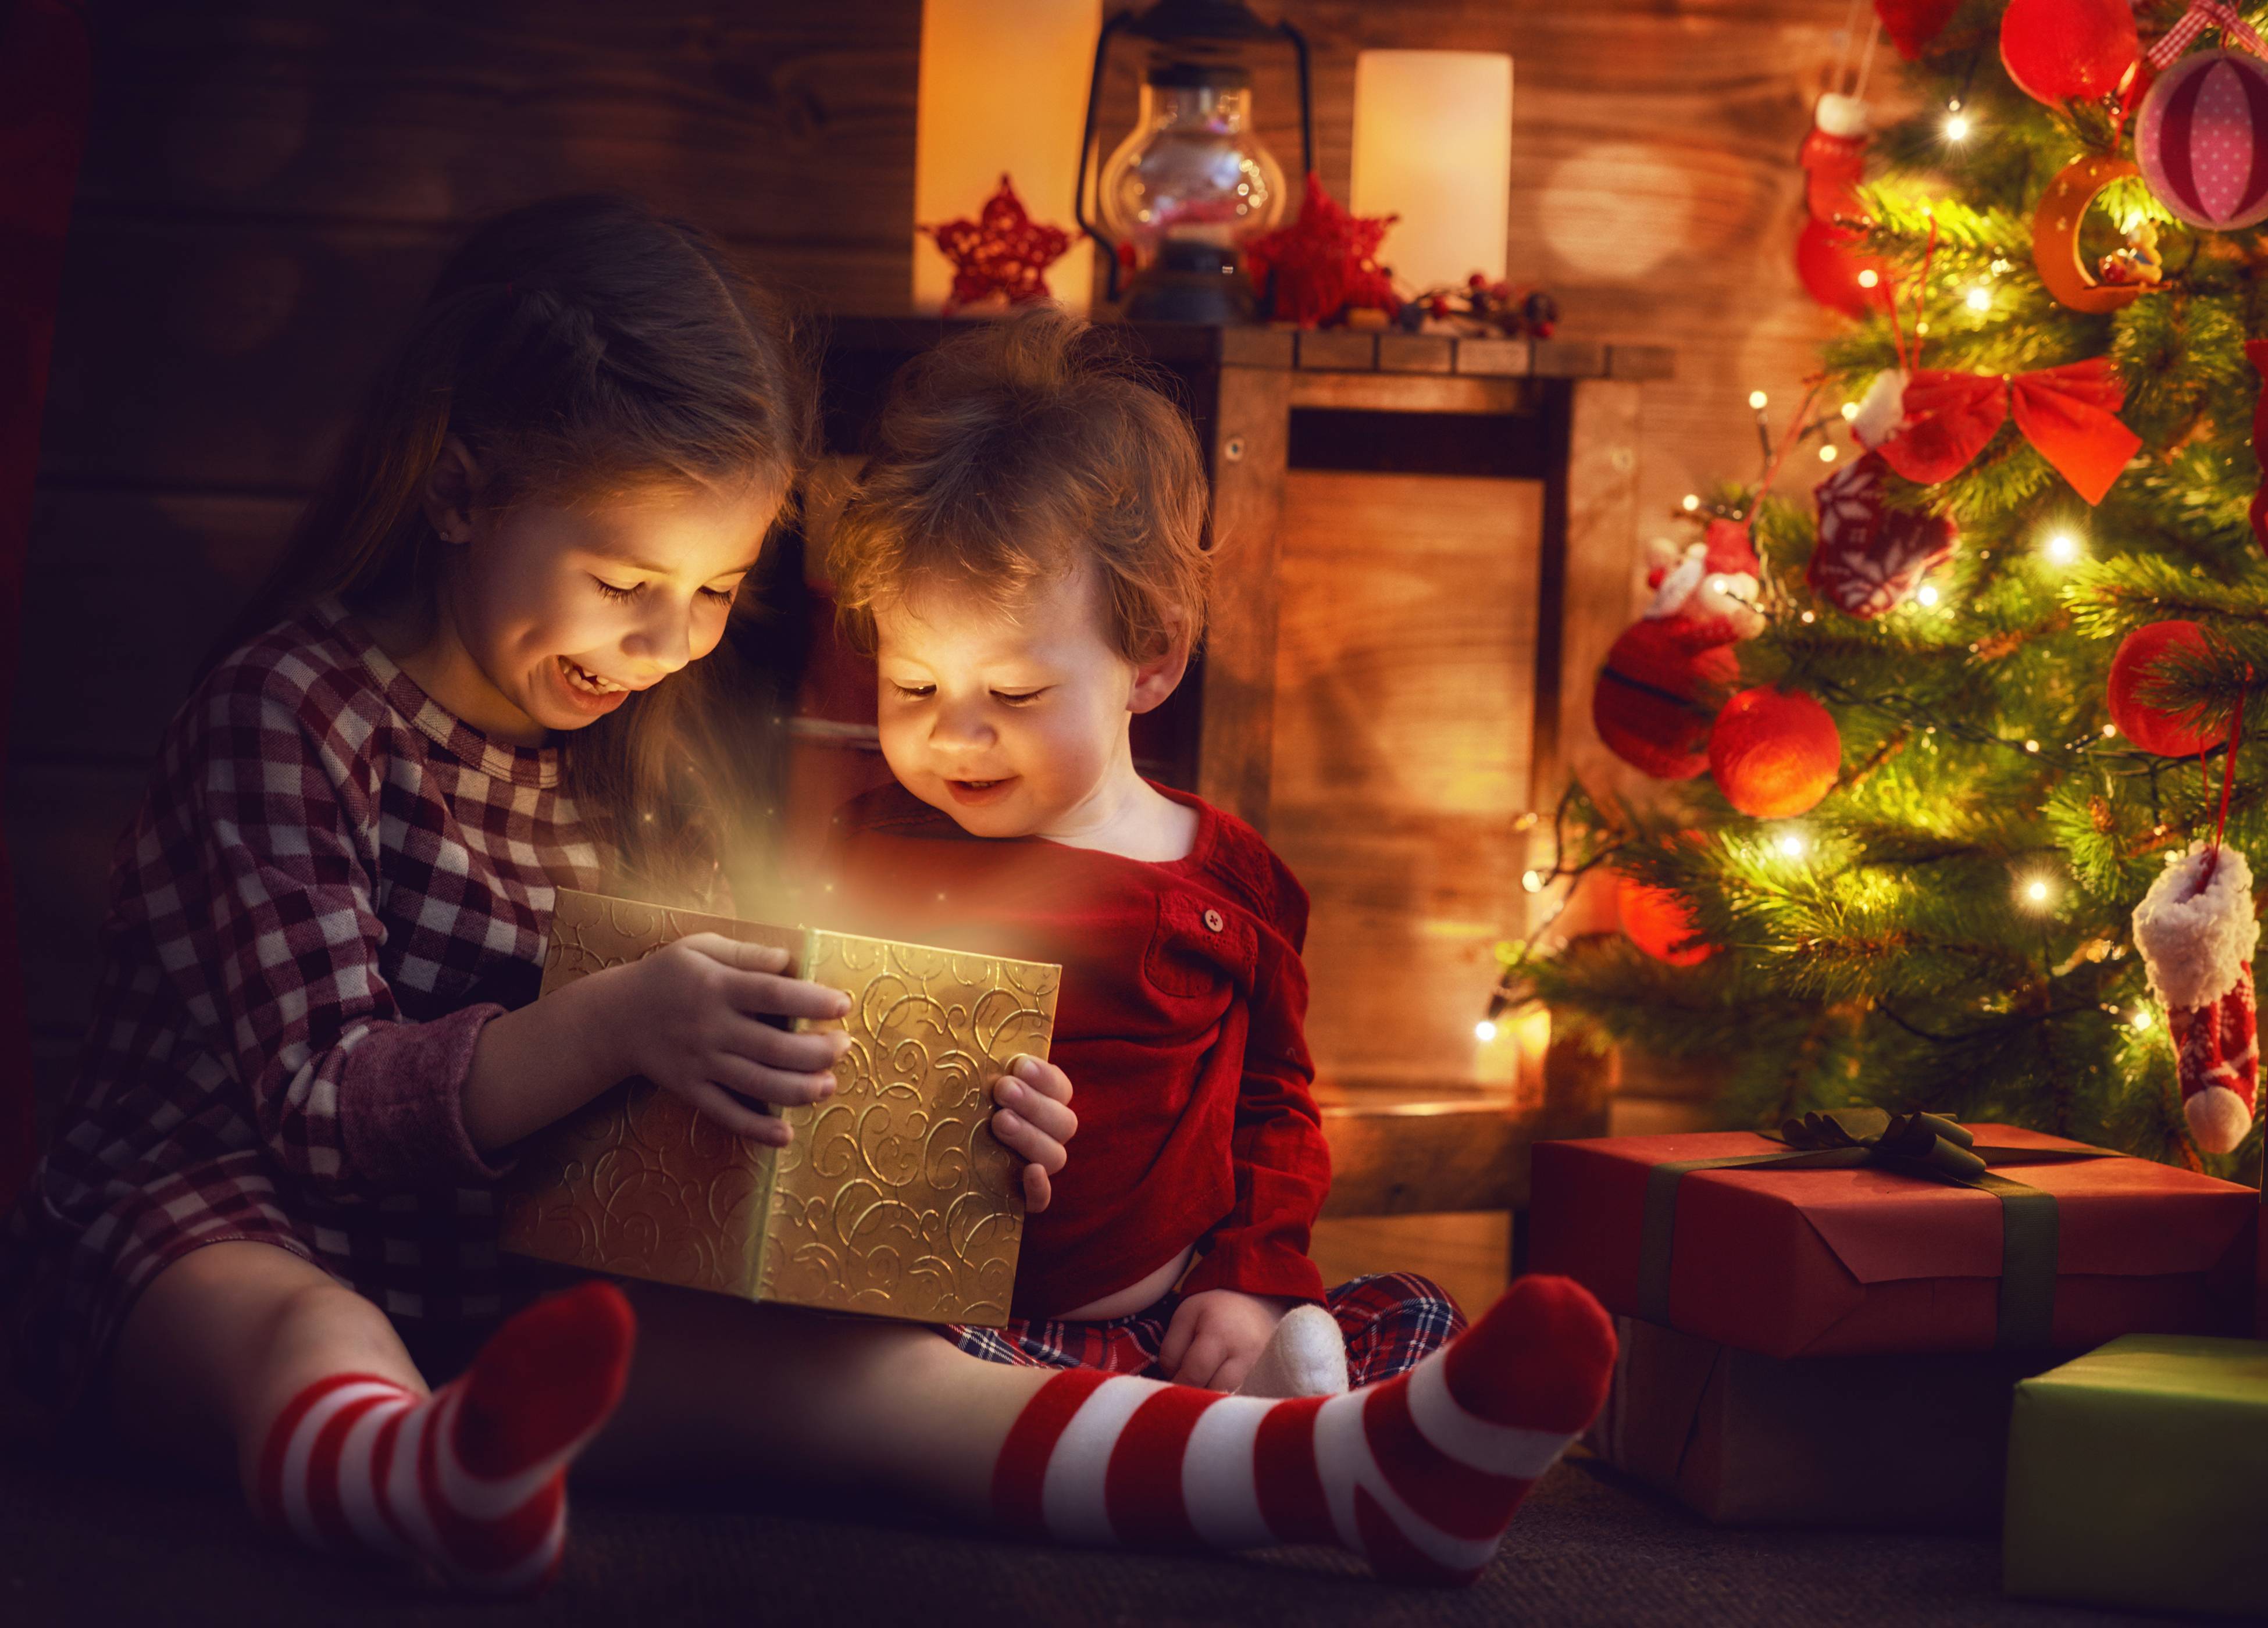 ᐉ кто дарит подарки в рождество. что дарят на рождество детям и взрослым. что подарить на рождество христово мужчине - mariya-mironova.ru